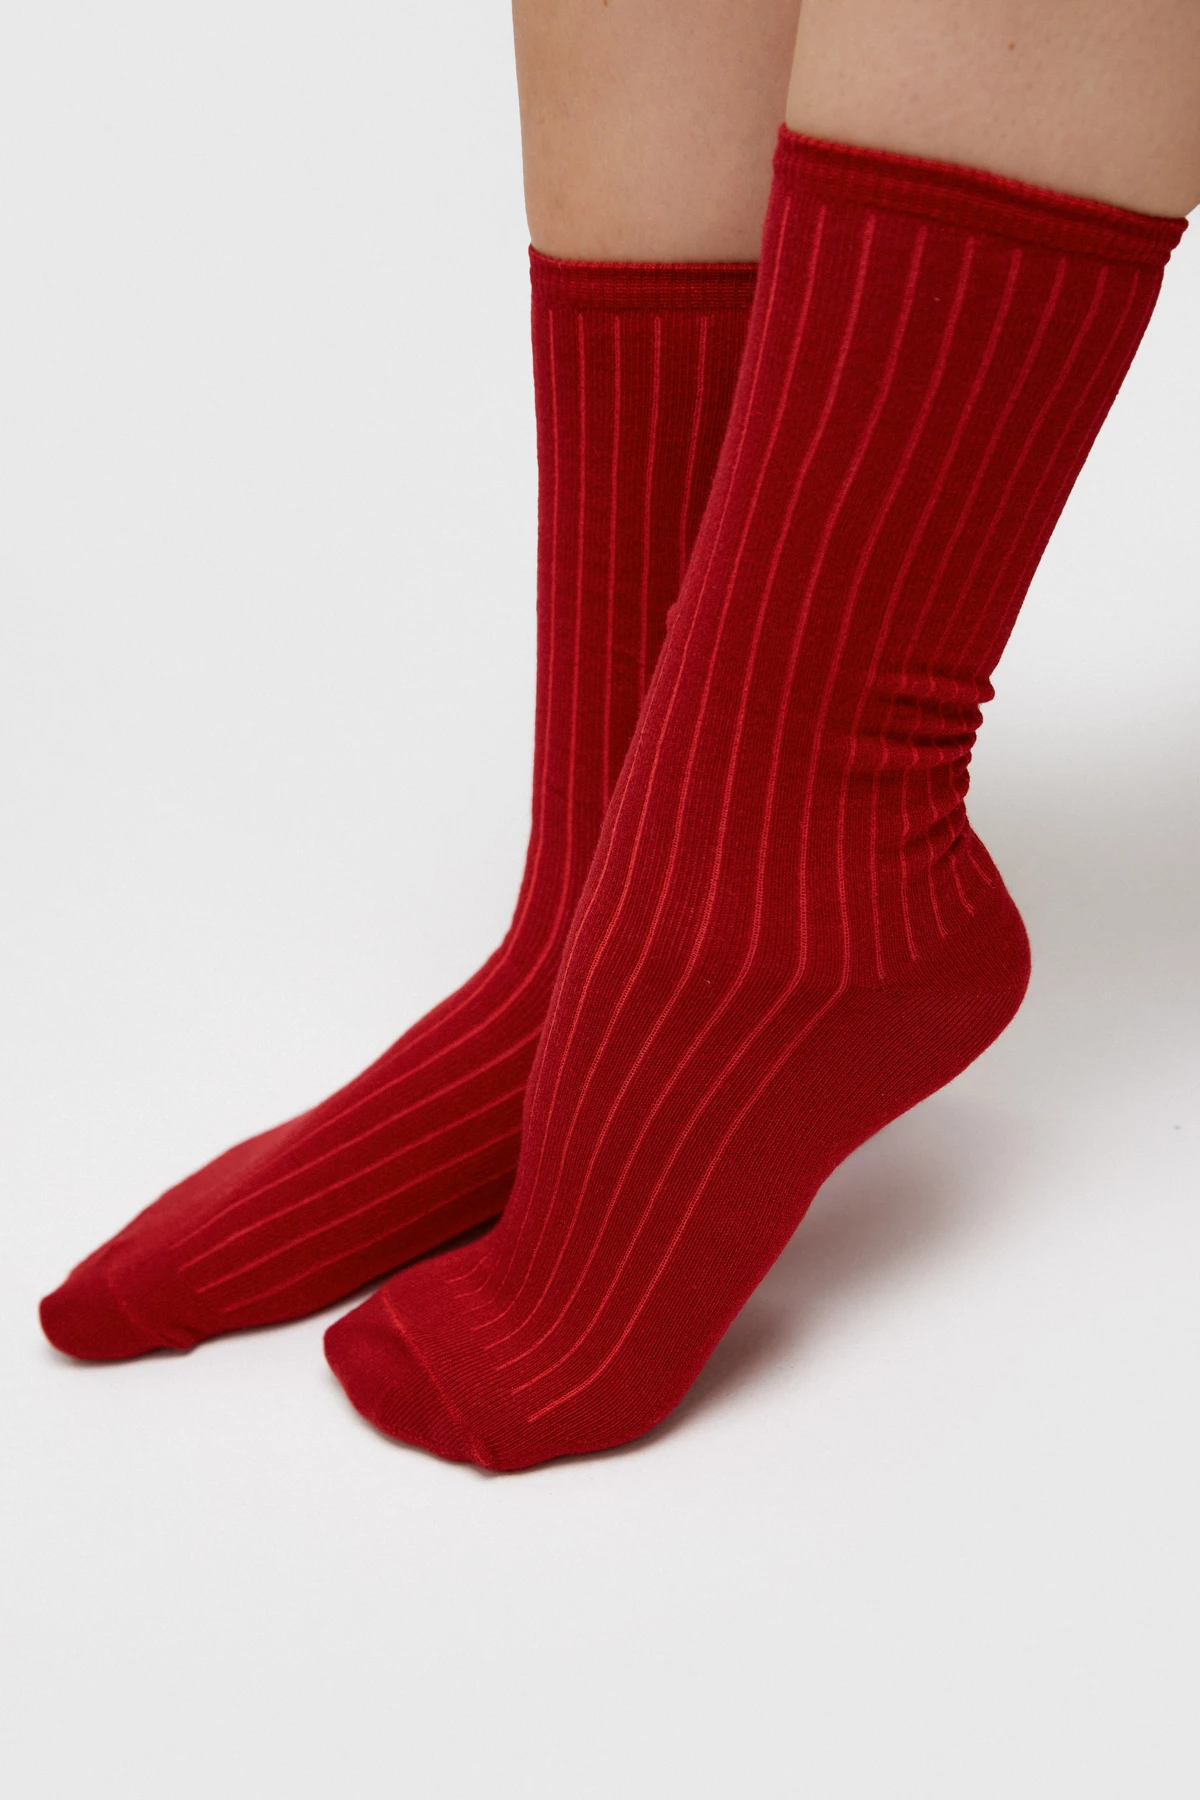 High cotton socks in bordeaux color, photo 1